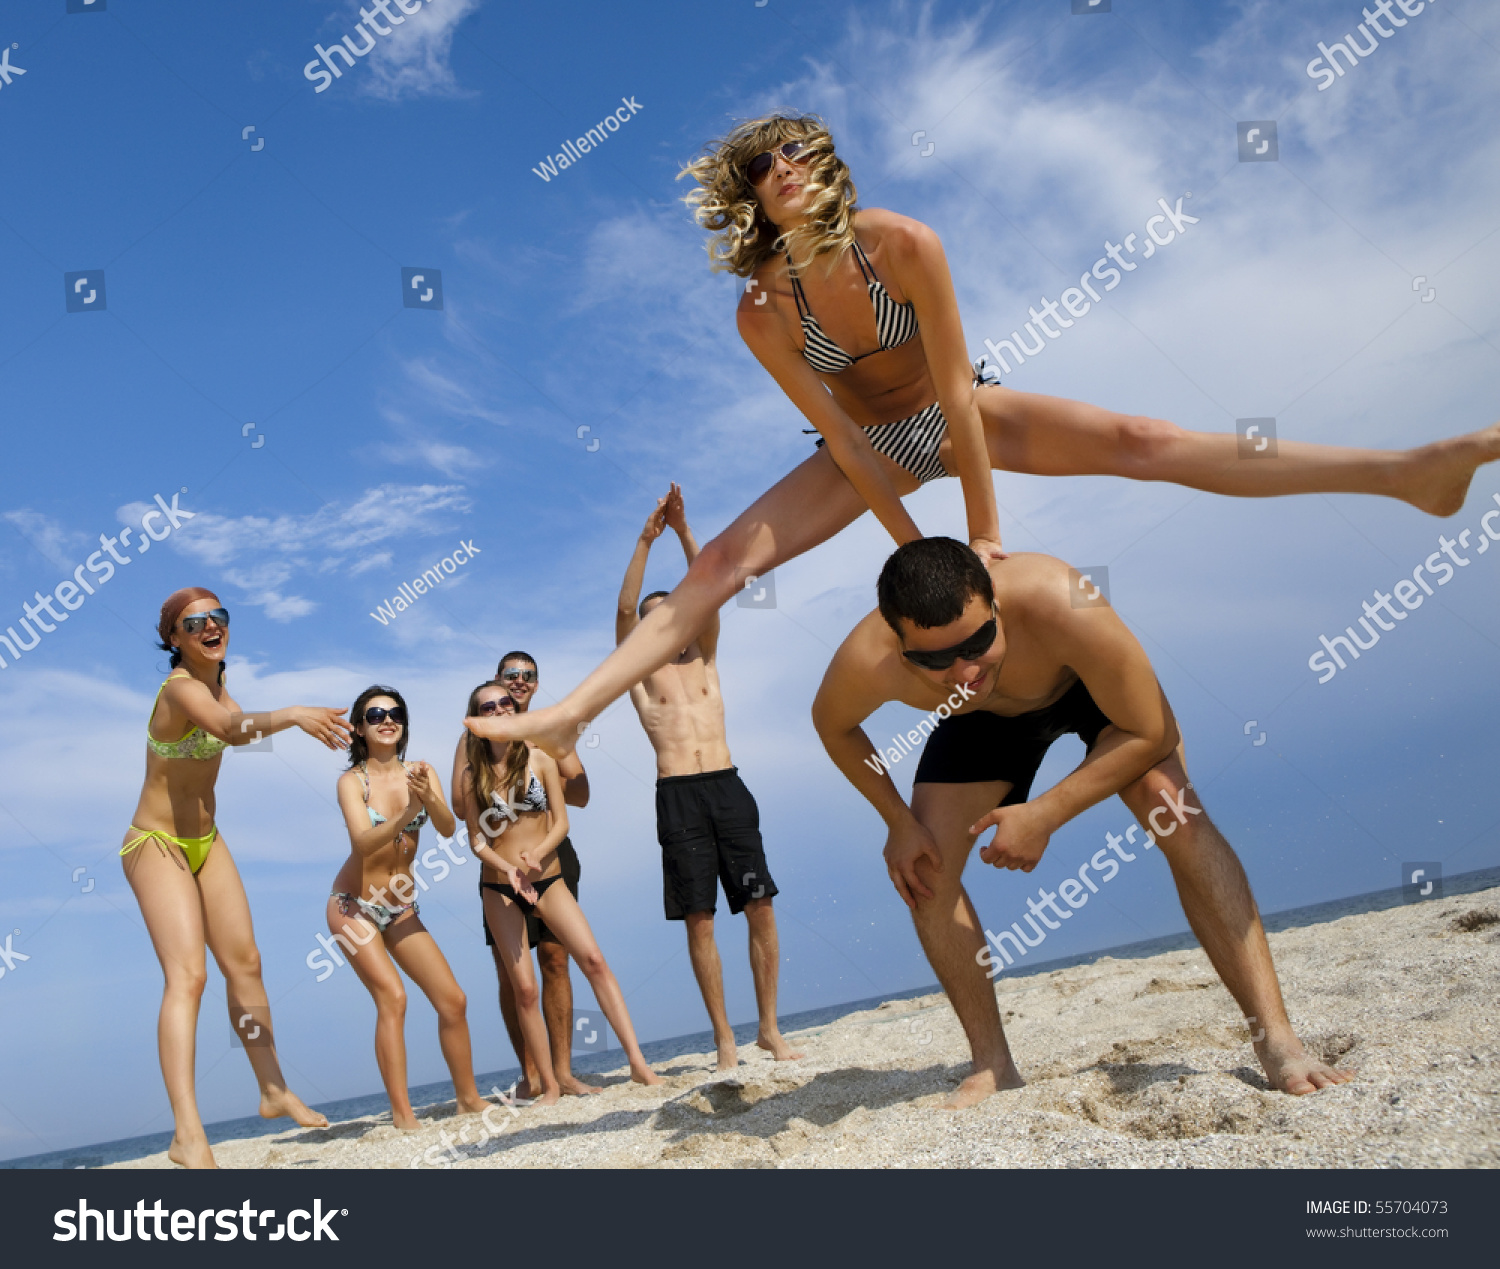 Young girl to jump across her boyfriend against joyful team of friends having fun at the beach #55704073